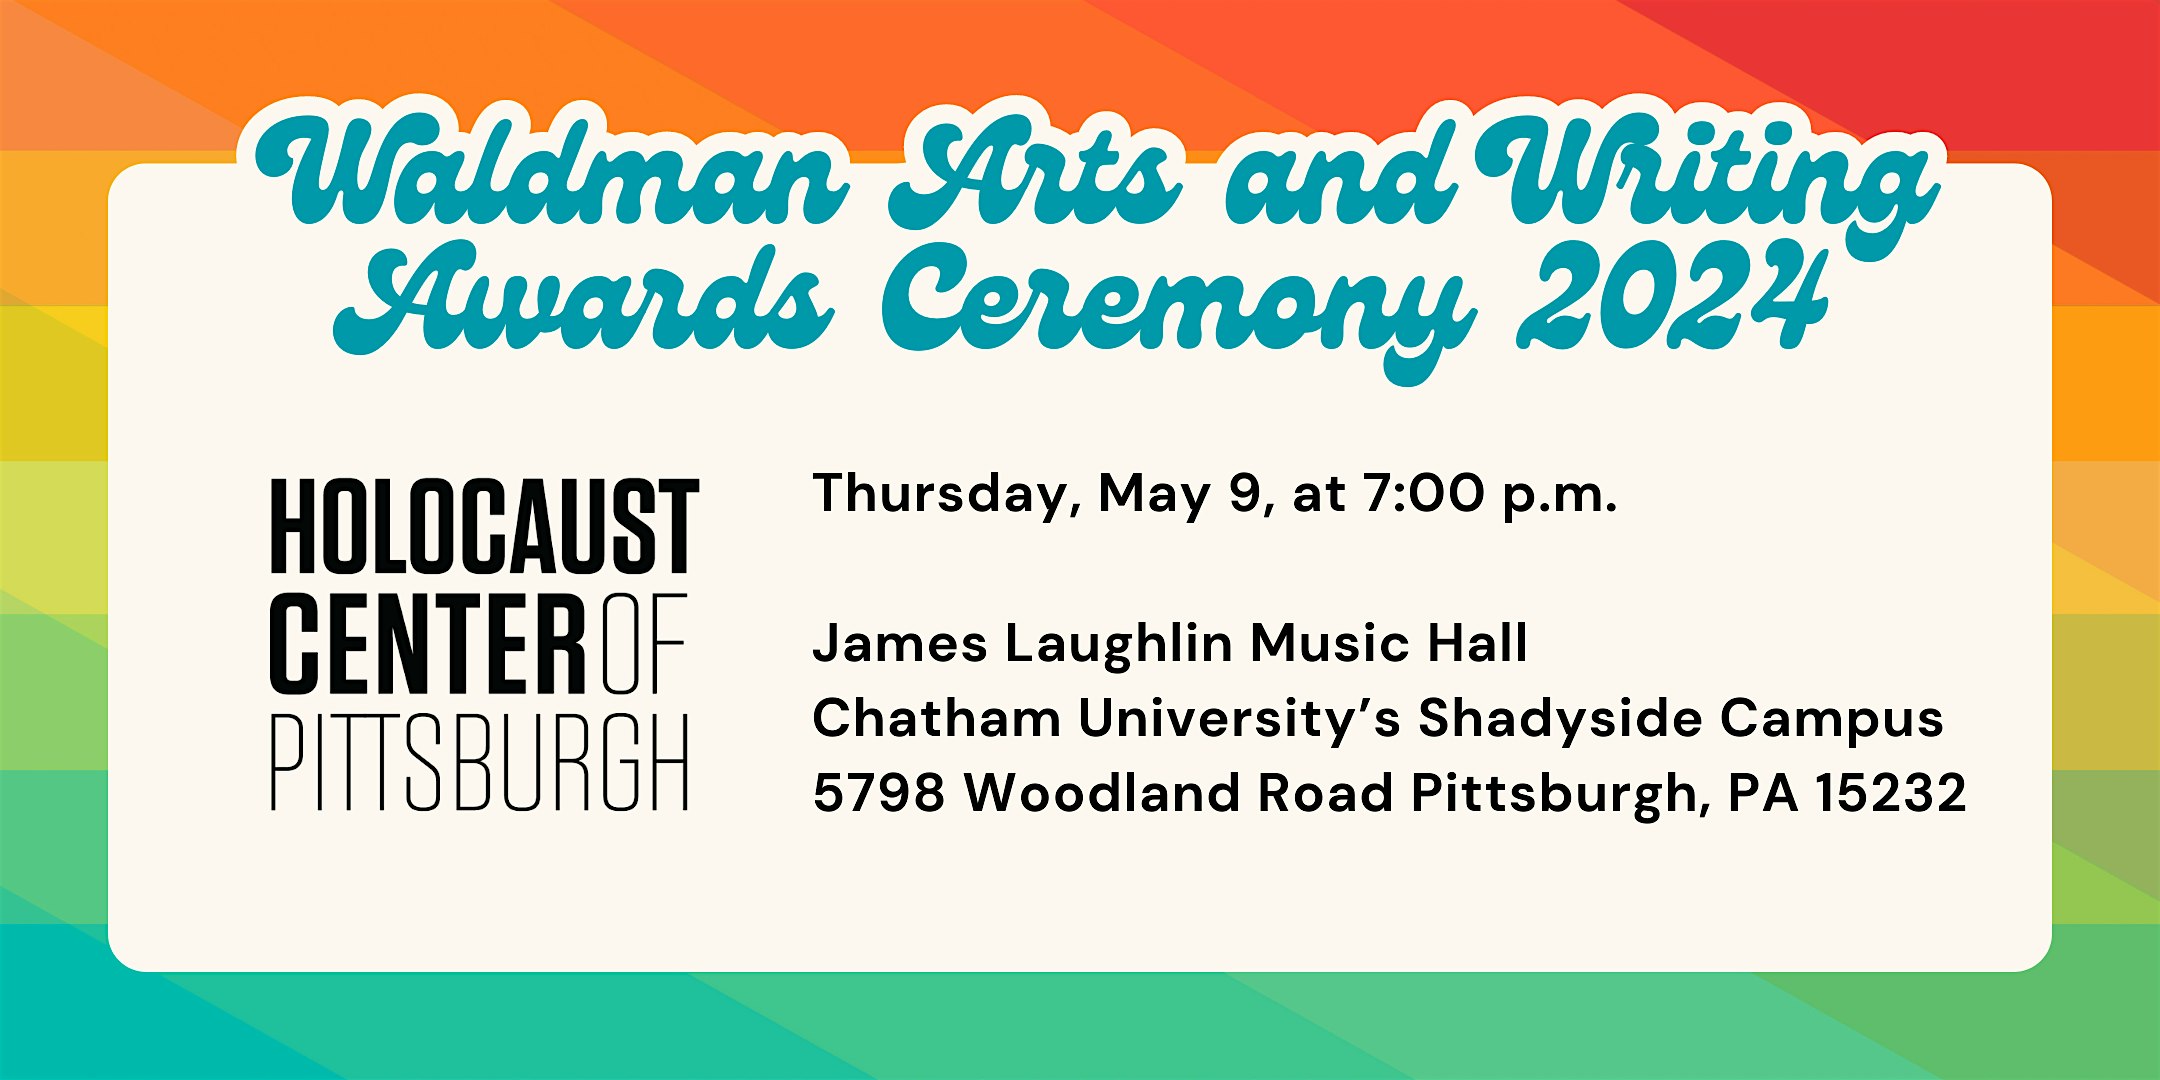 Waldman Arts and Writing Awards Ceremony 2024